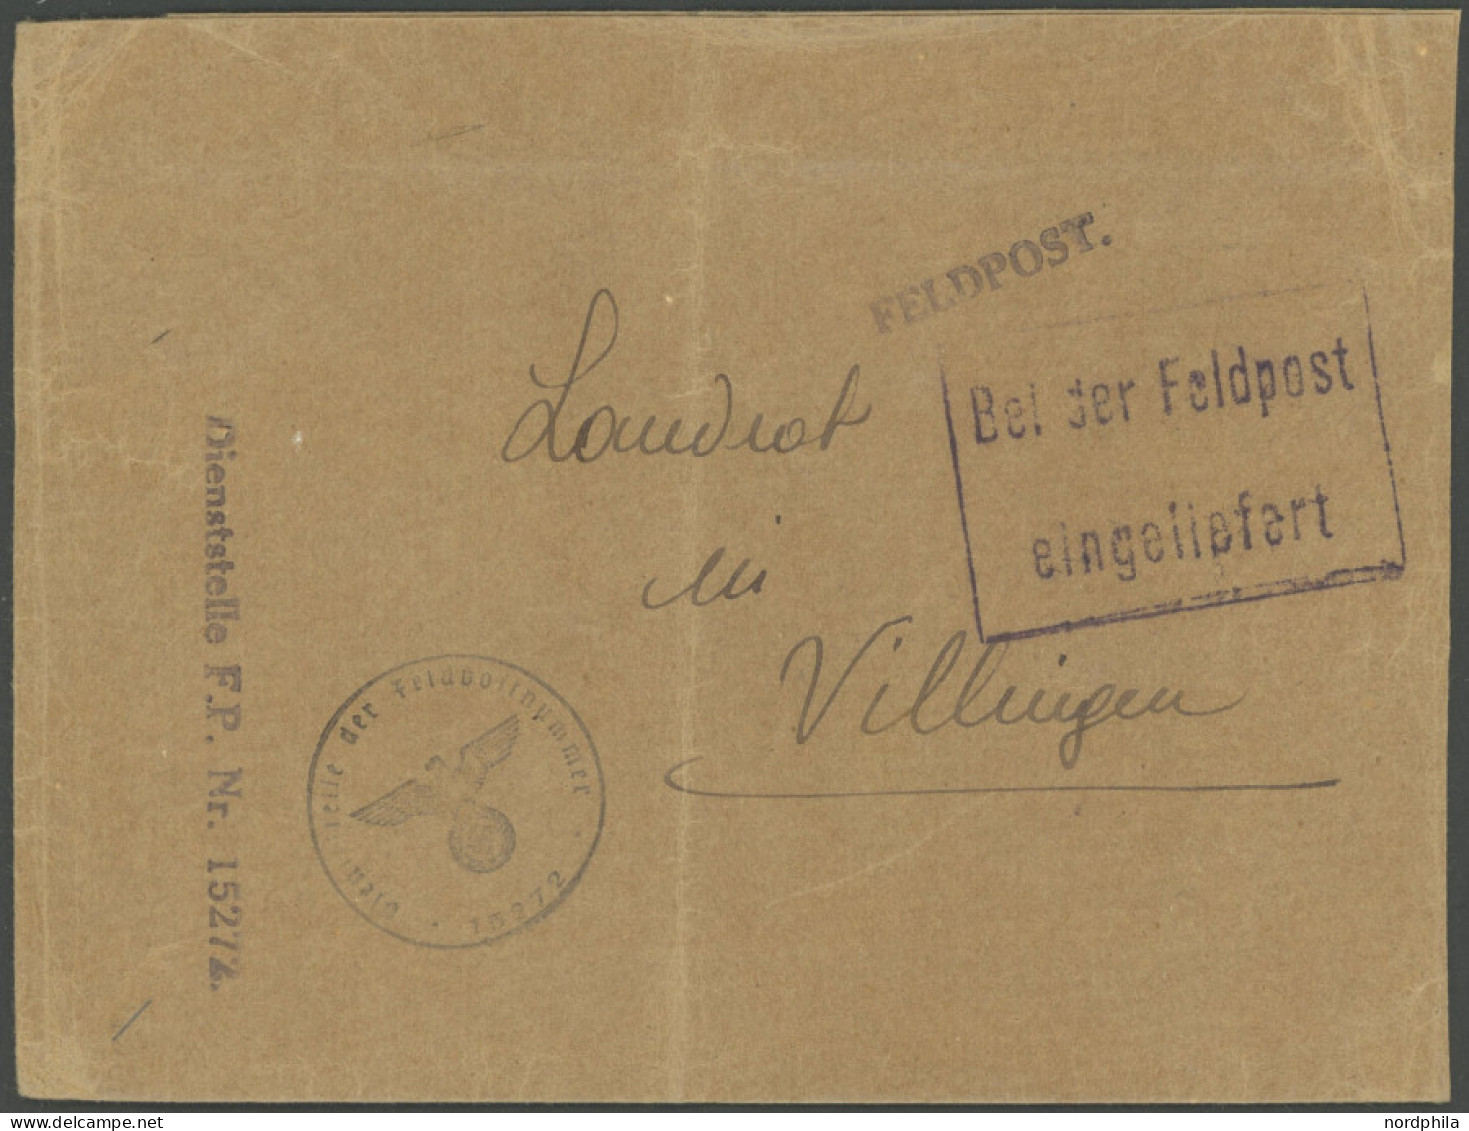 FELDPOST II. WK BELEGE 1942/3, Gross-Paris Kommandant (FP-Nr. 15272): Päckchenbeutel (12x16 Cm) Mit R2 Bei Der Feldpost  - Occupation 1938-45